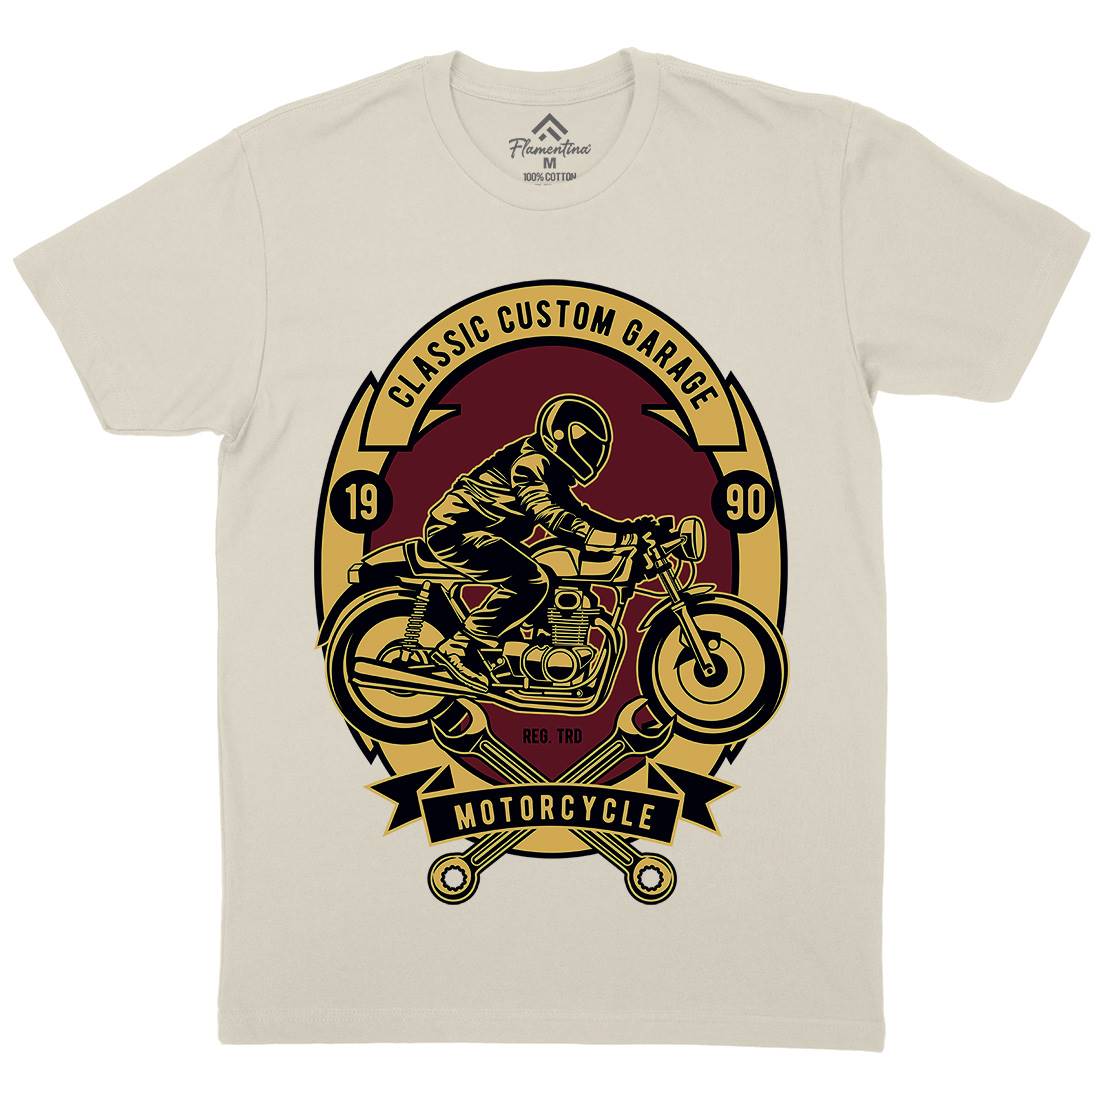 Classic Custom Garage Mens Organic Crew Neck T-Shirt Motorcycles D519